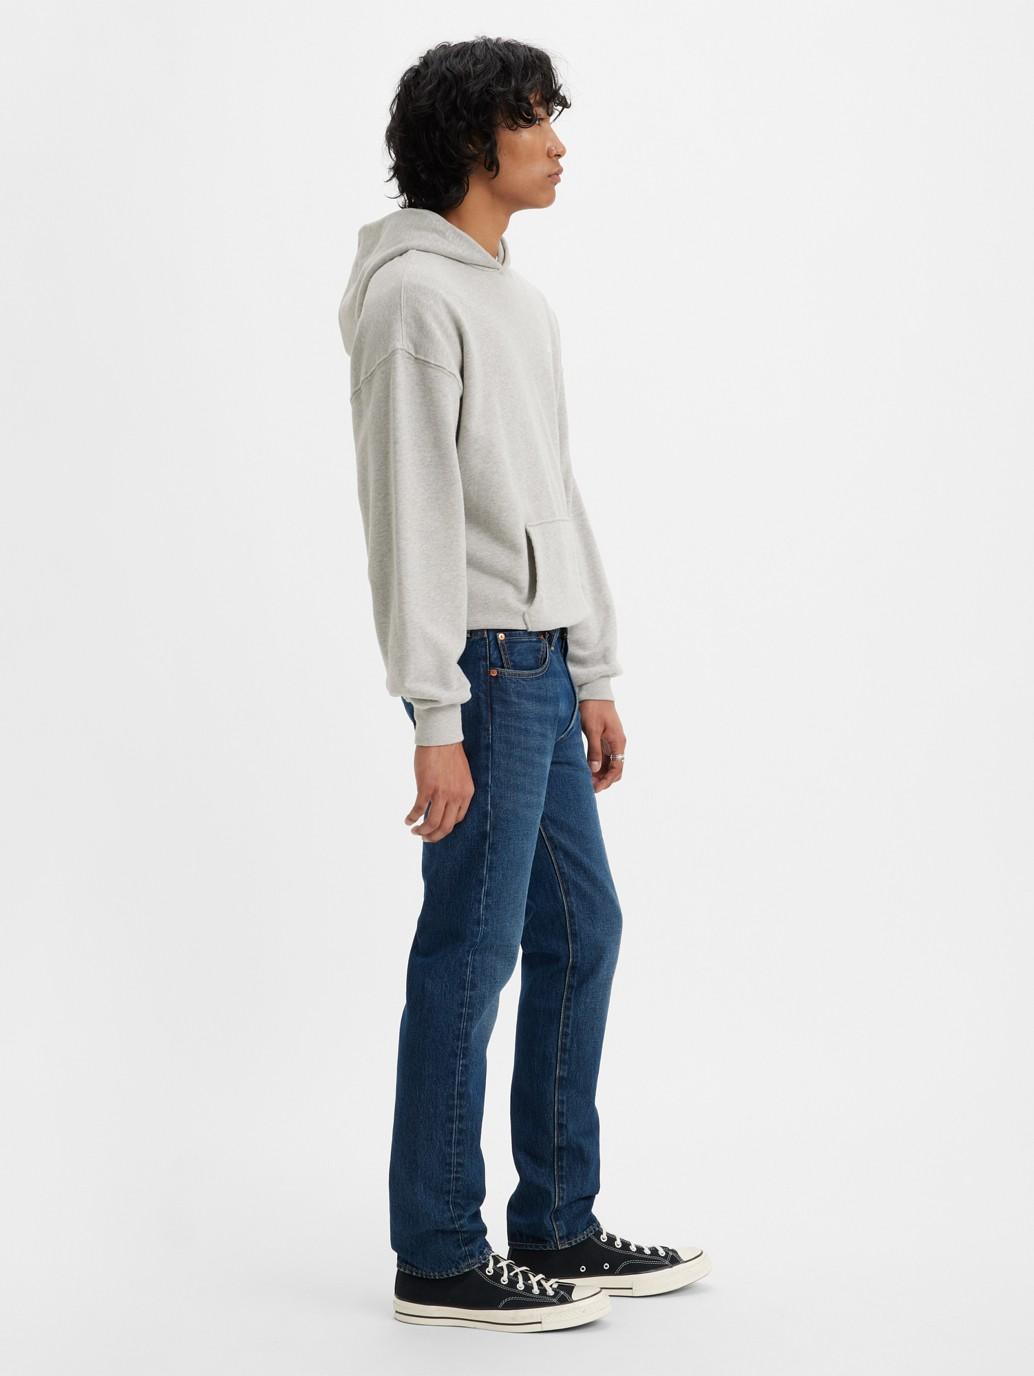 Buy Levi's® Men's 501® Slim Taper Jeans| Levi’s® Official Online Store PH